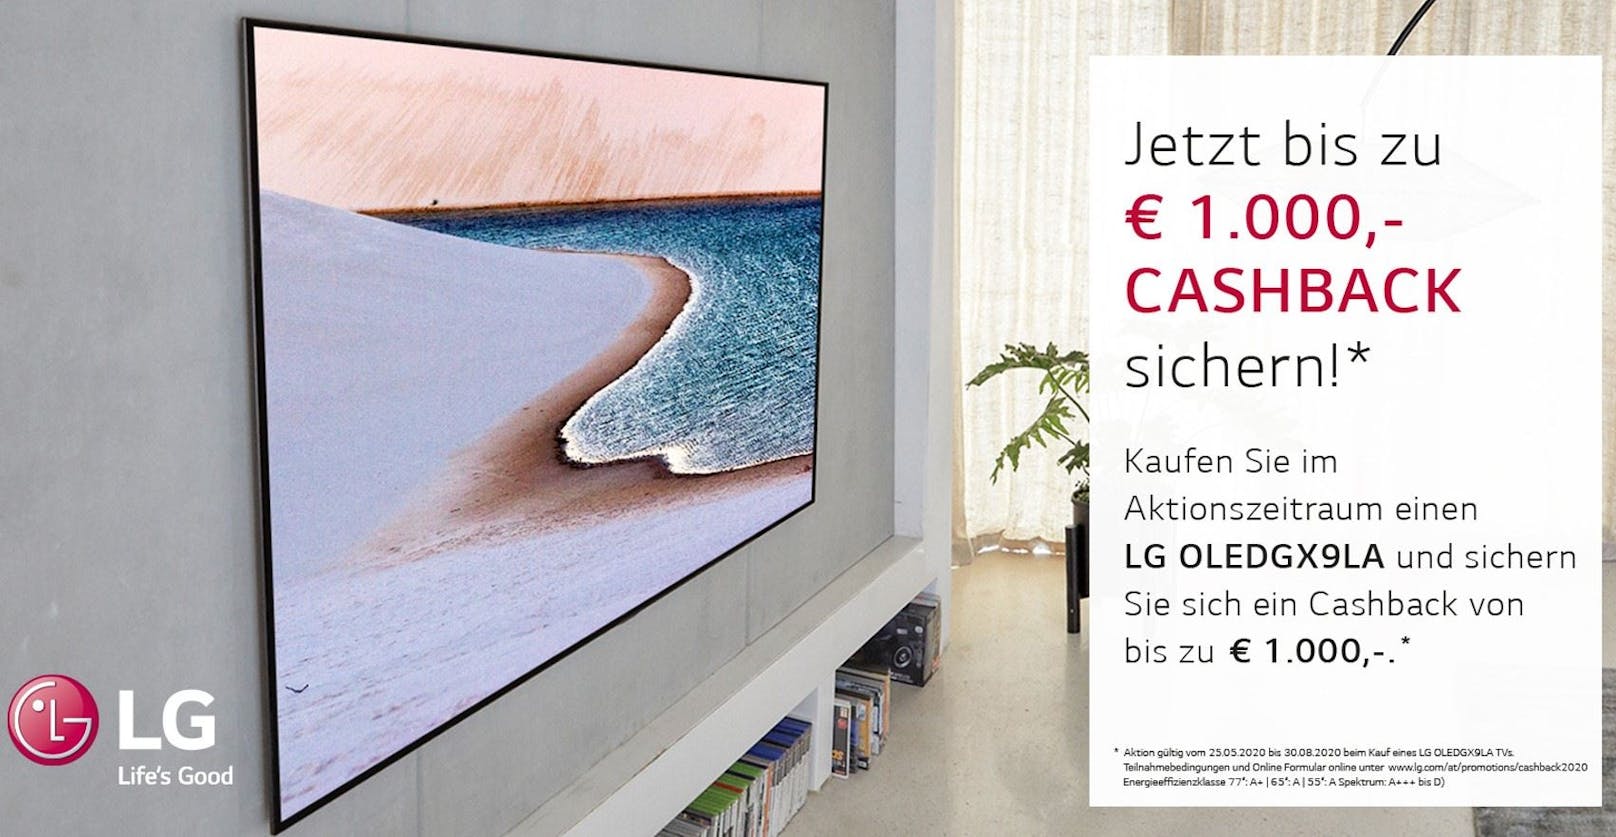 LG Electronics startet Cashback-Aktion in Österreich.